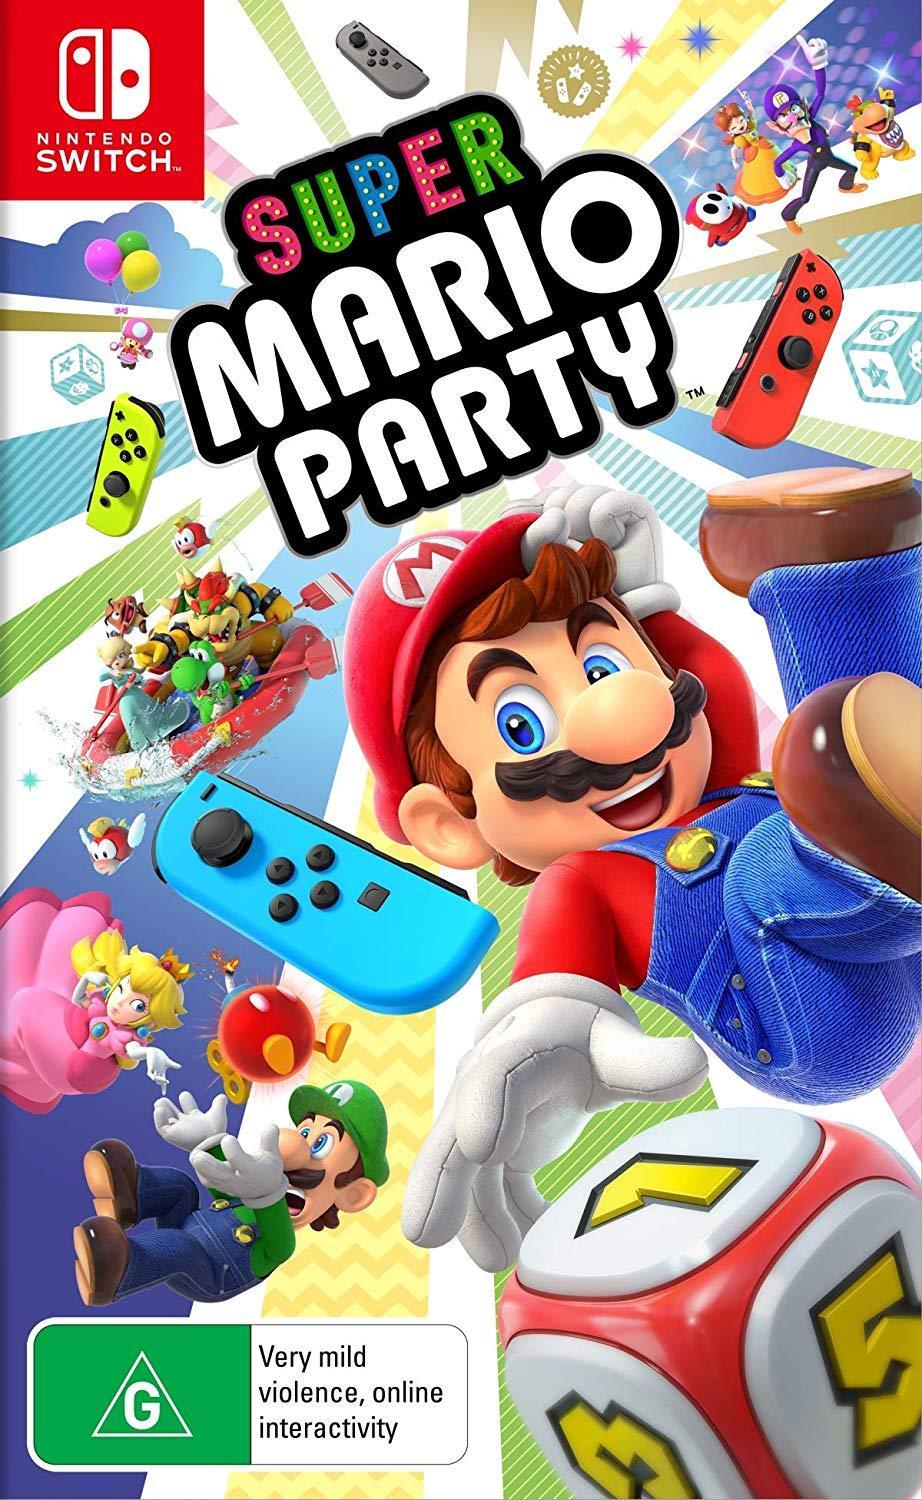 Super Mario Party - Nintendo Switch - GD Games 